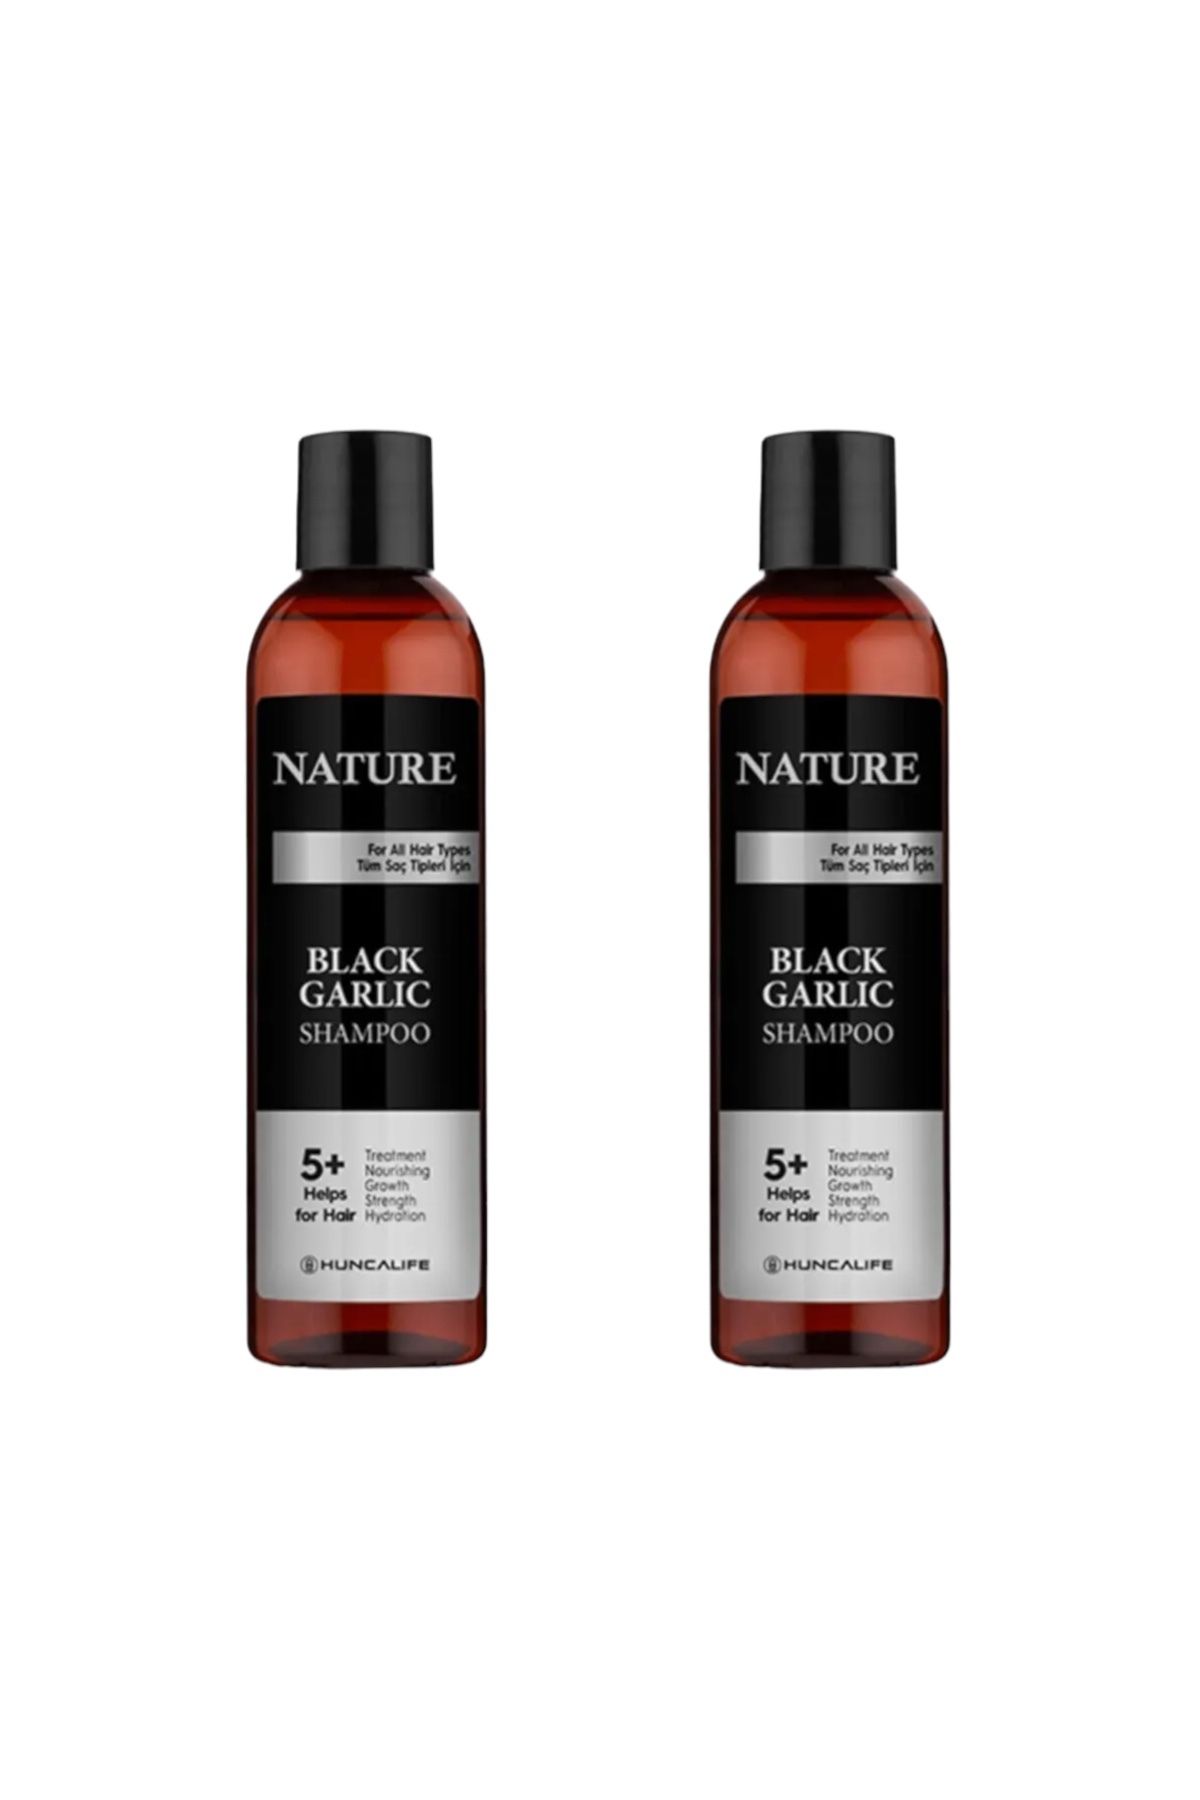 Huncalife Nature Siyah Sarımsaklı Şampuan (Black Garlic Shampoo) - 350ml X2